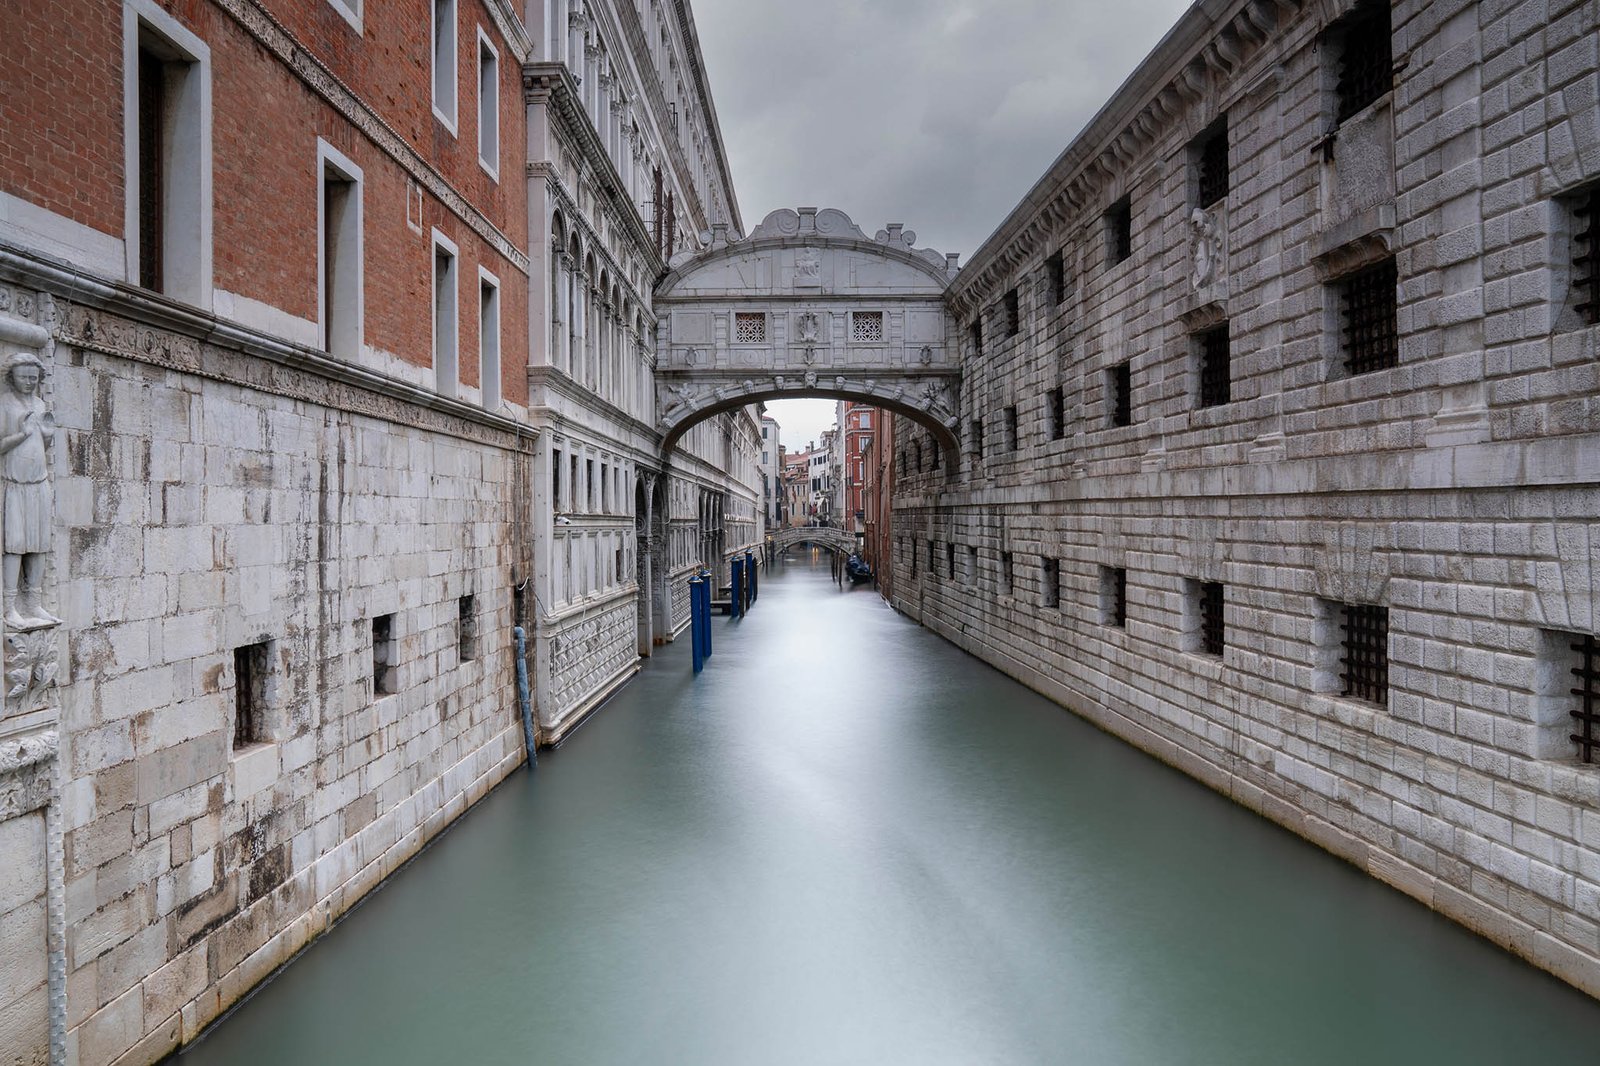 Bridge of Sighs, Venice, Italy.